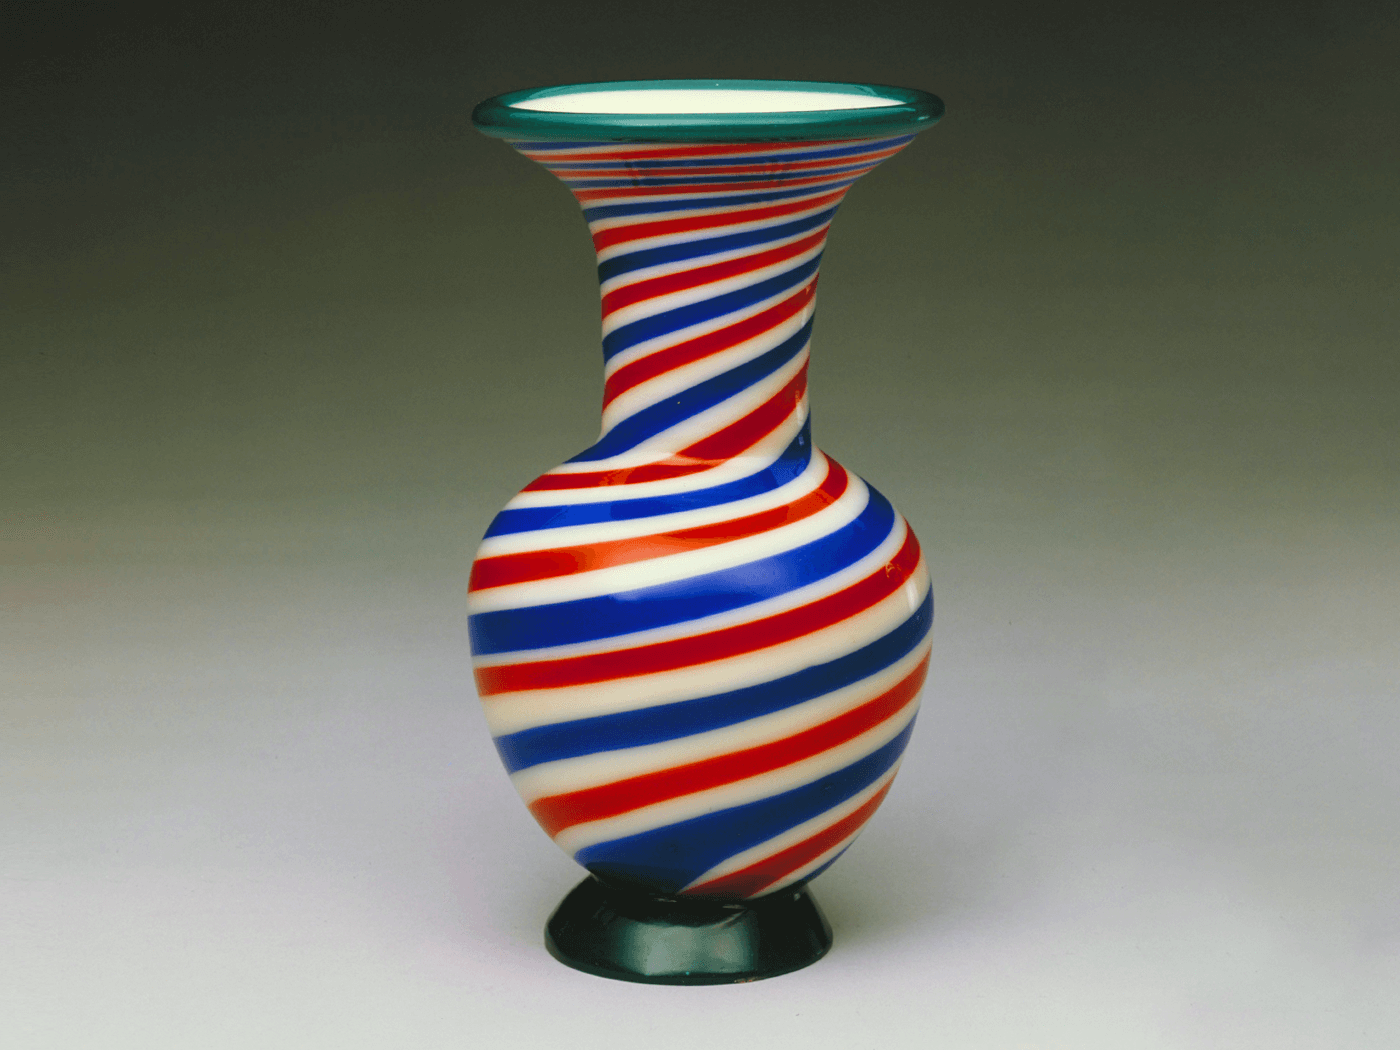 Vase with spiral pattern